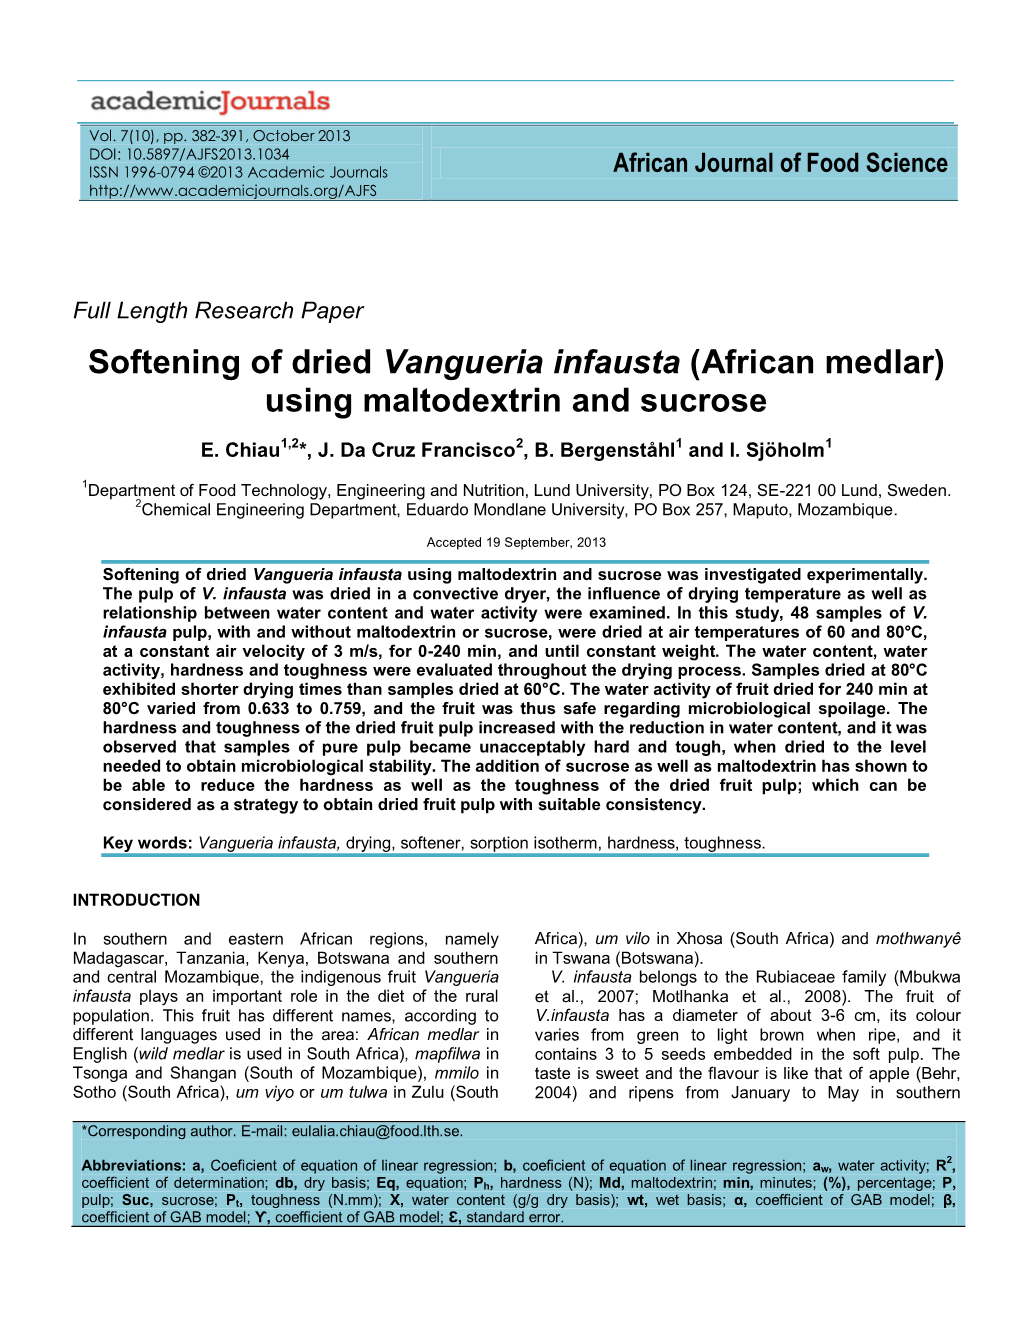 Softening of Dried Vangueria Infausta (African Medlar) Using Maltodextrin and Sucrose